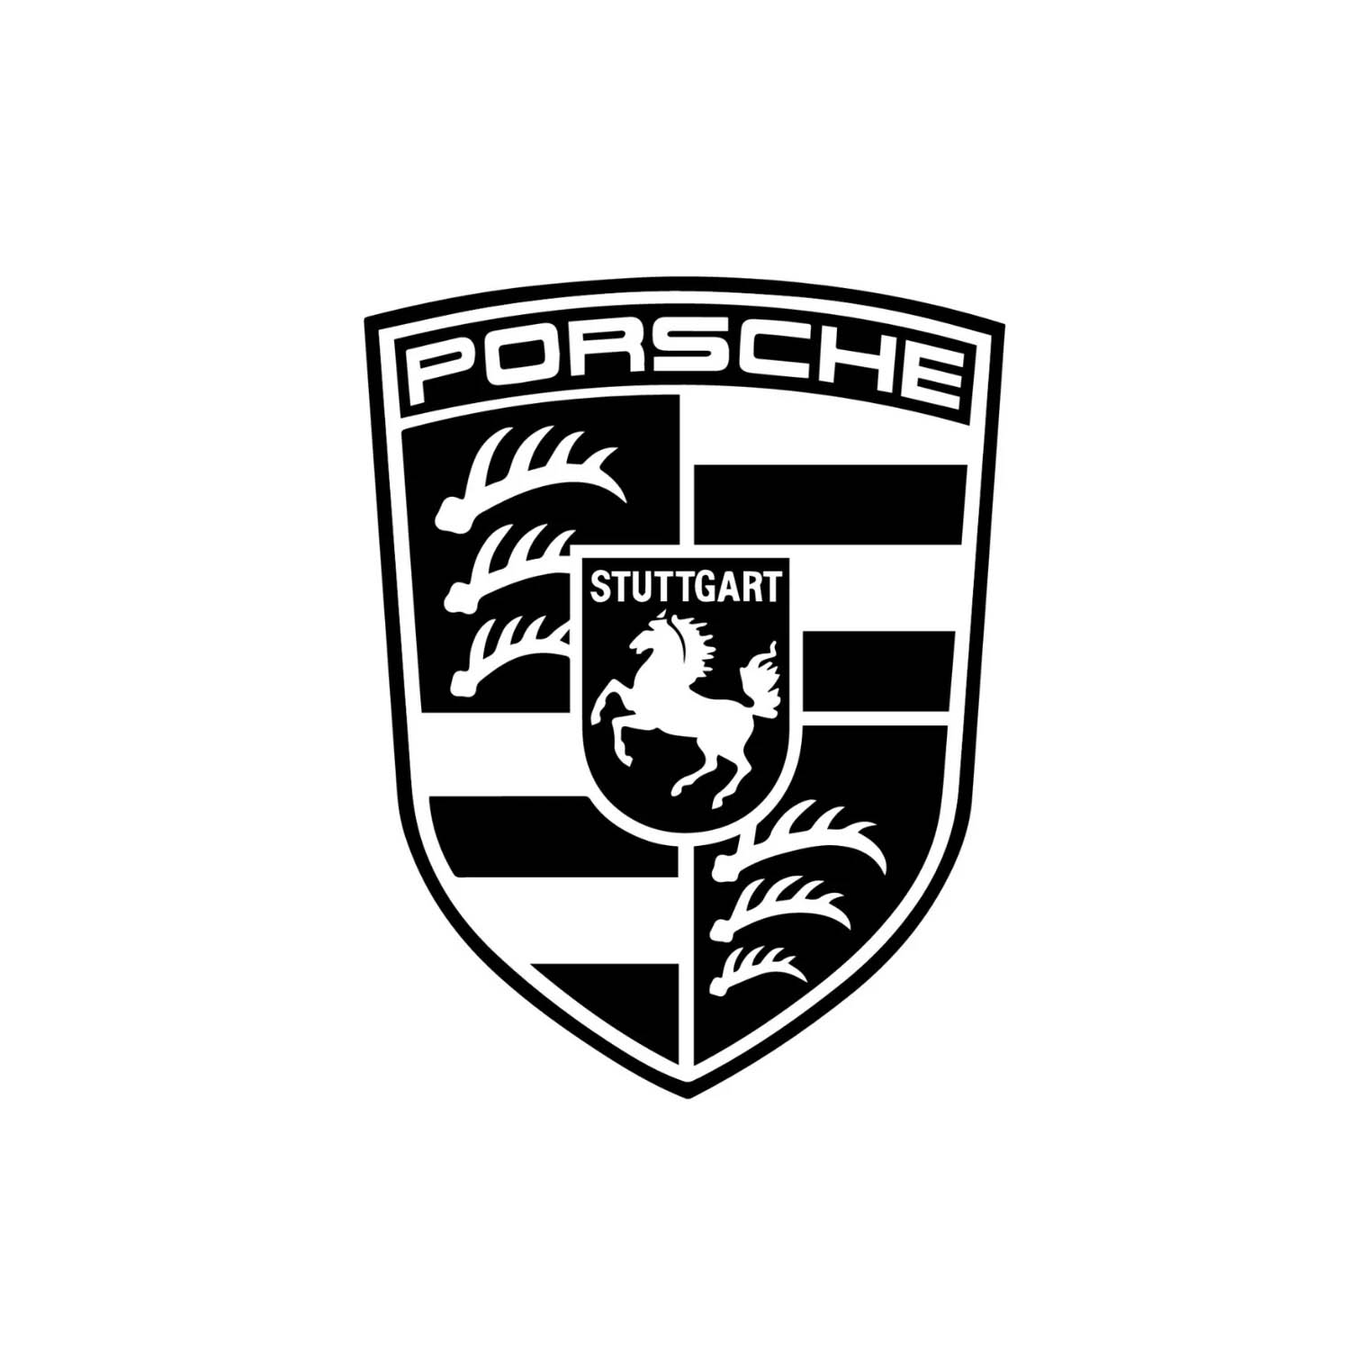 Porsche Boot Liners